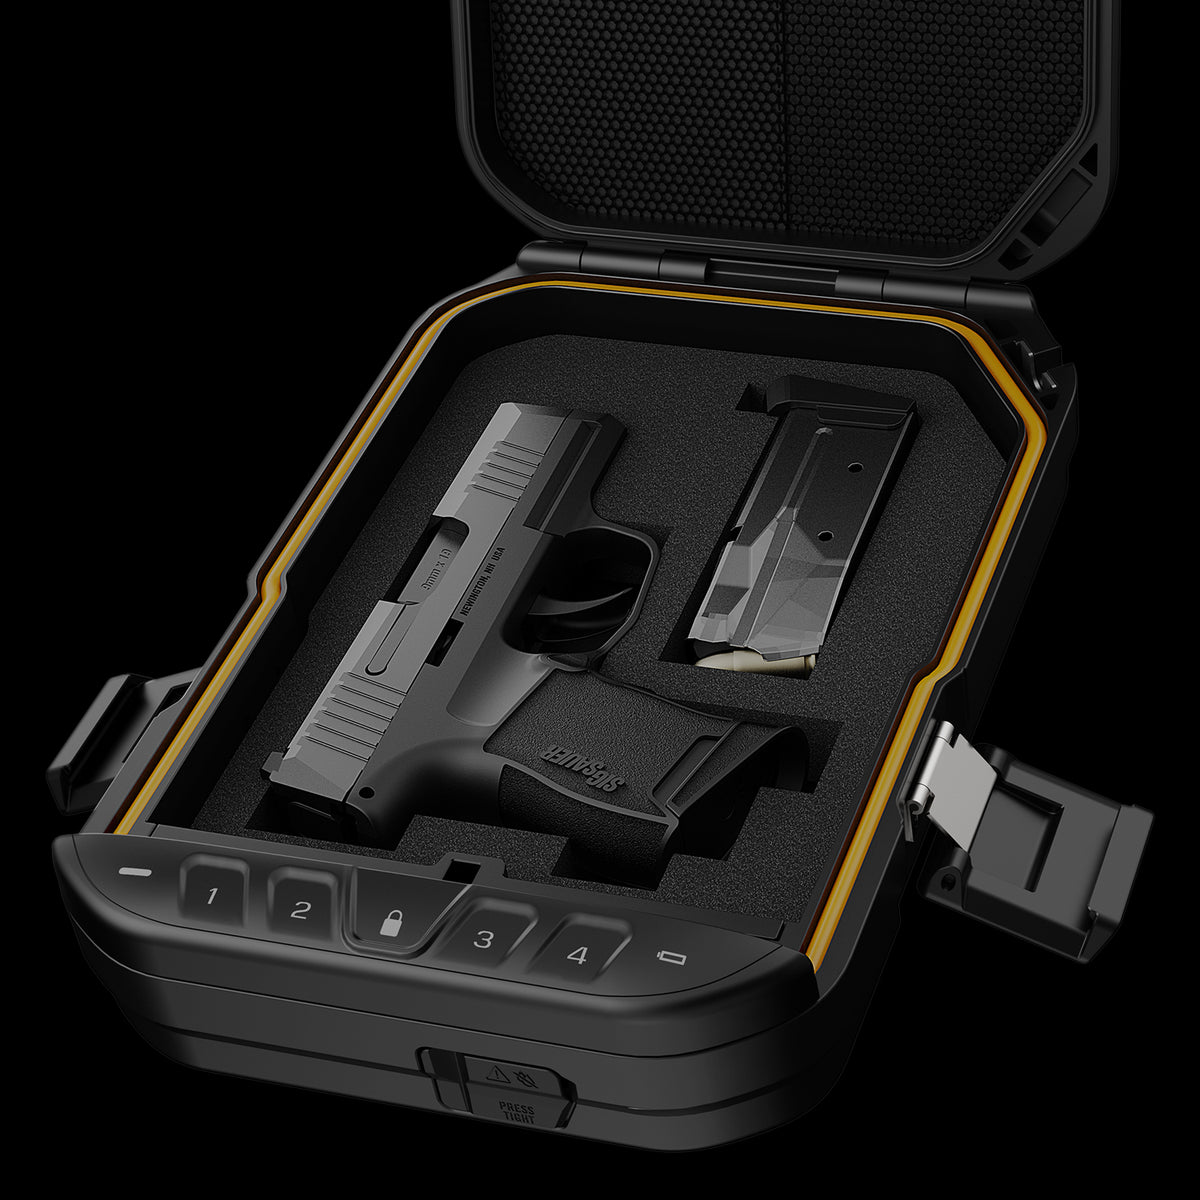 Vaultek Sig Sauer LifePod Rugged Weather Resistant Lockbox with Handgun and Magazine